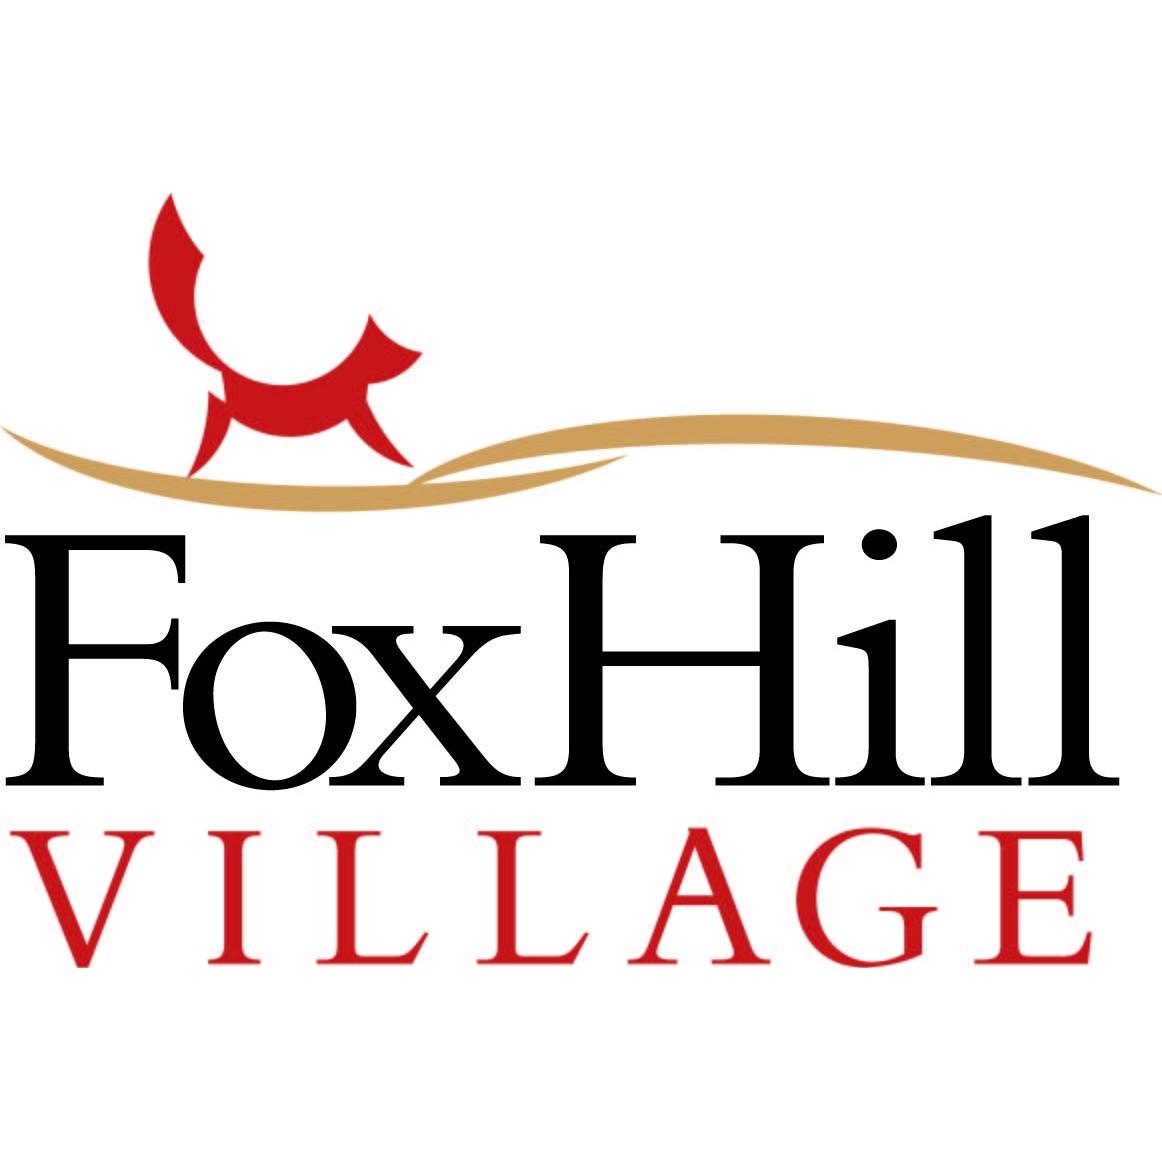 Fox Hill Village Photo